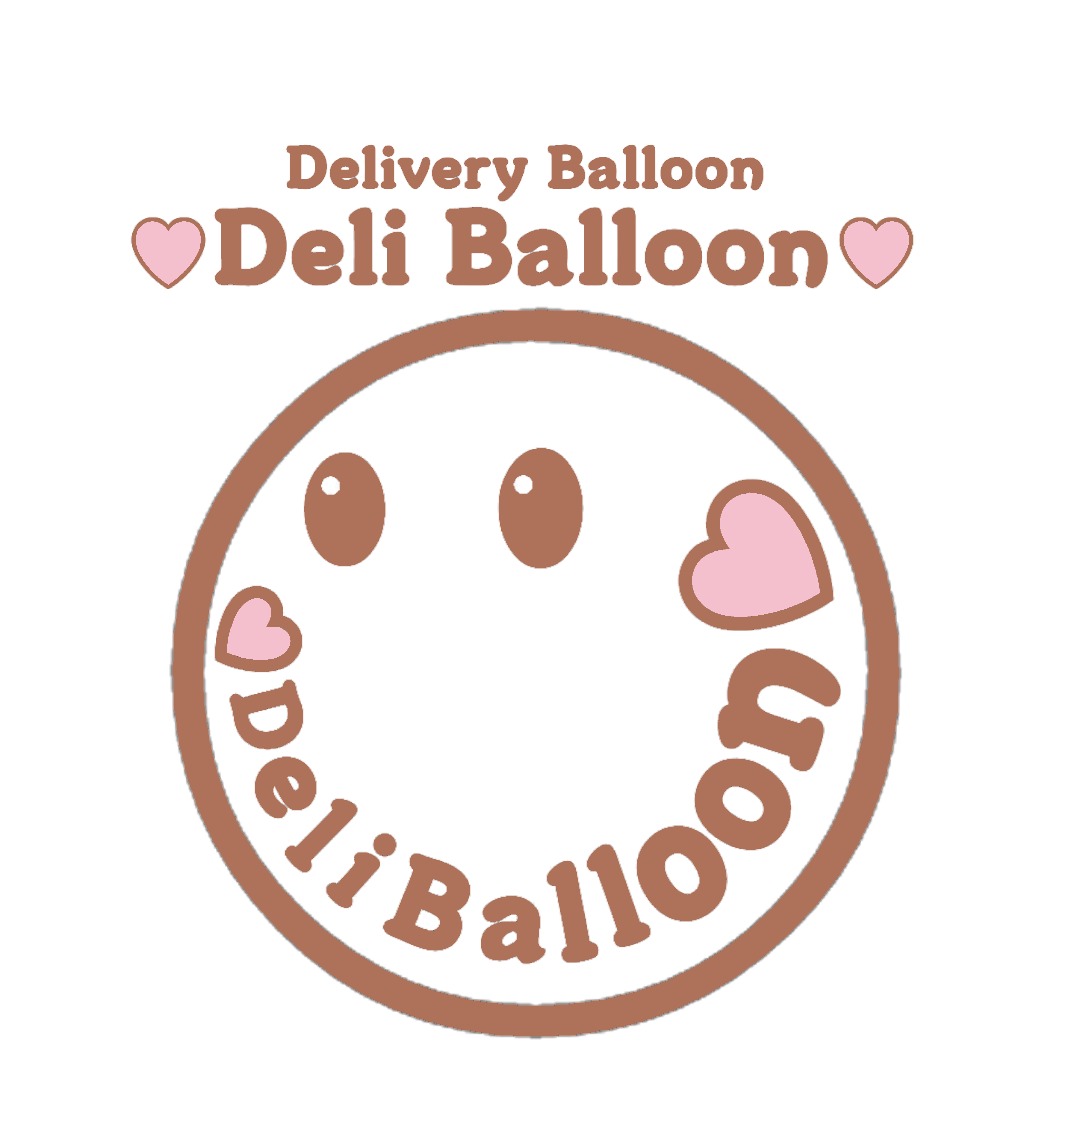 DeliveryBalloonShop♡DeliBalloon♡